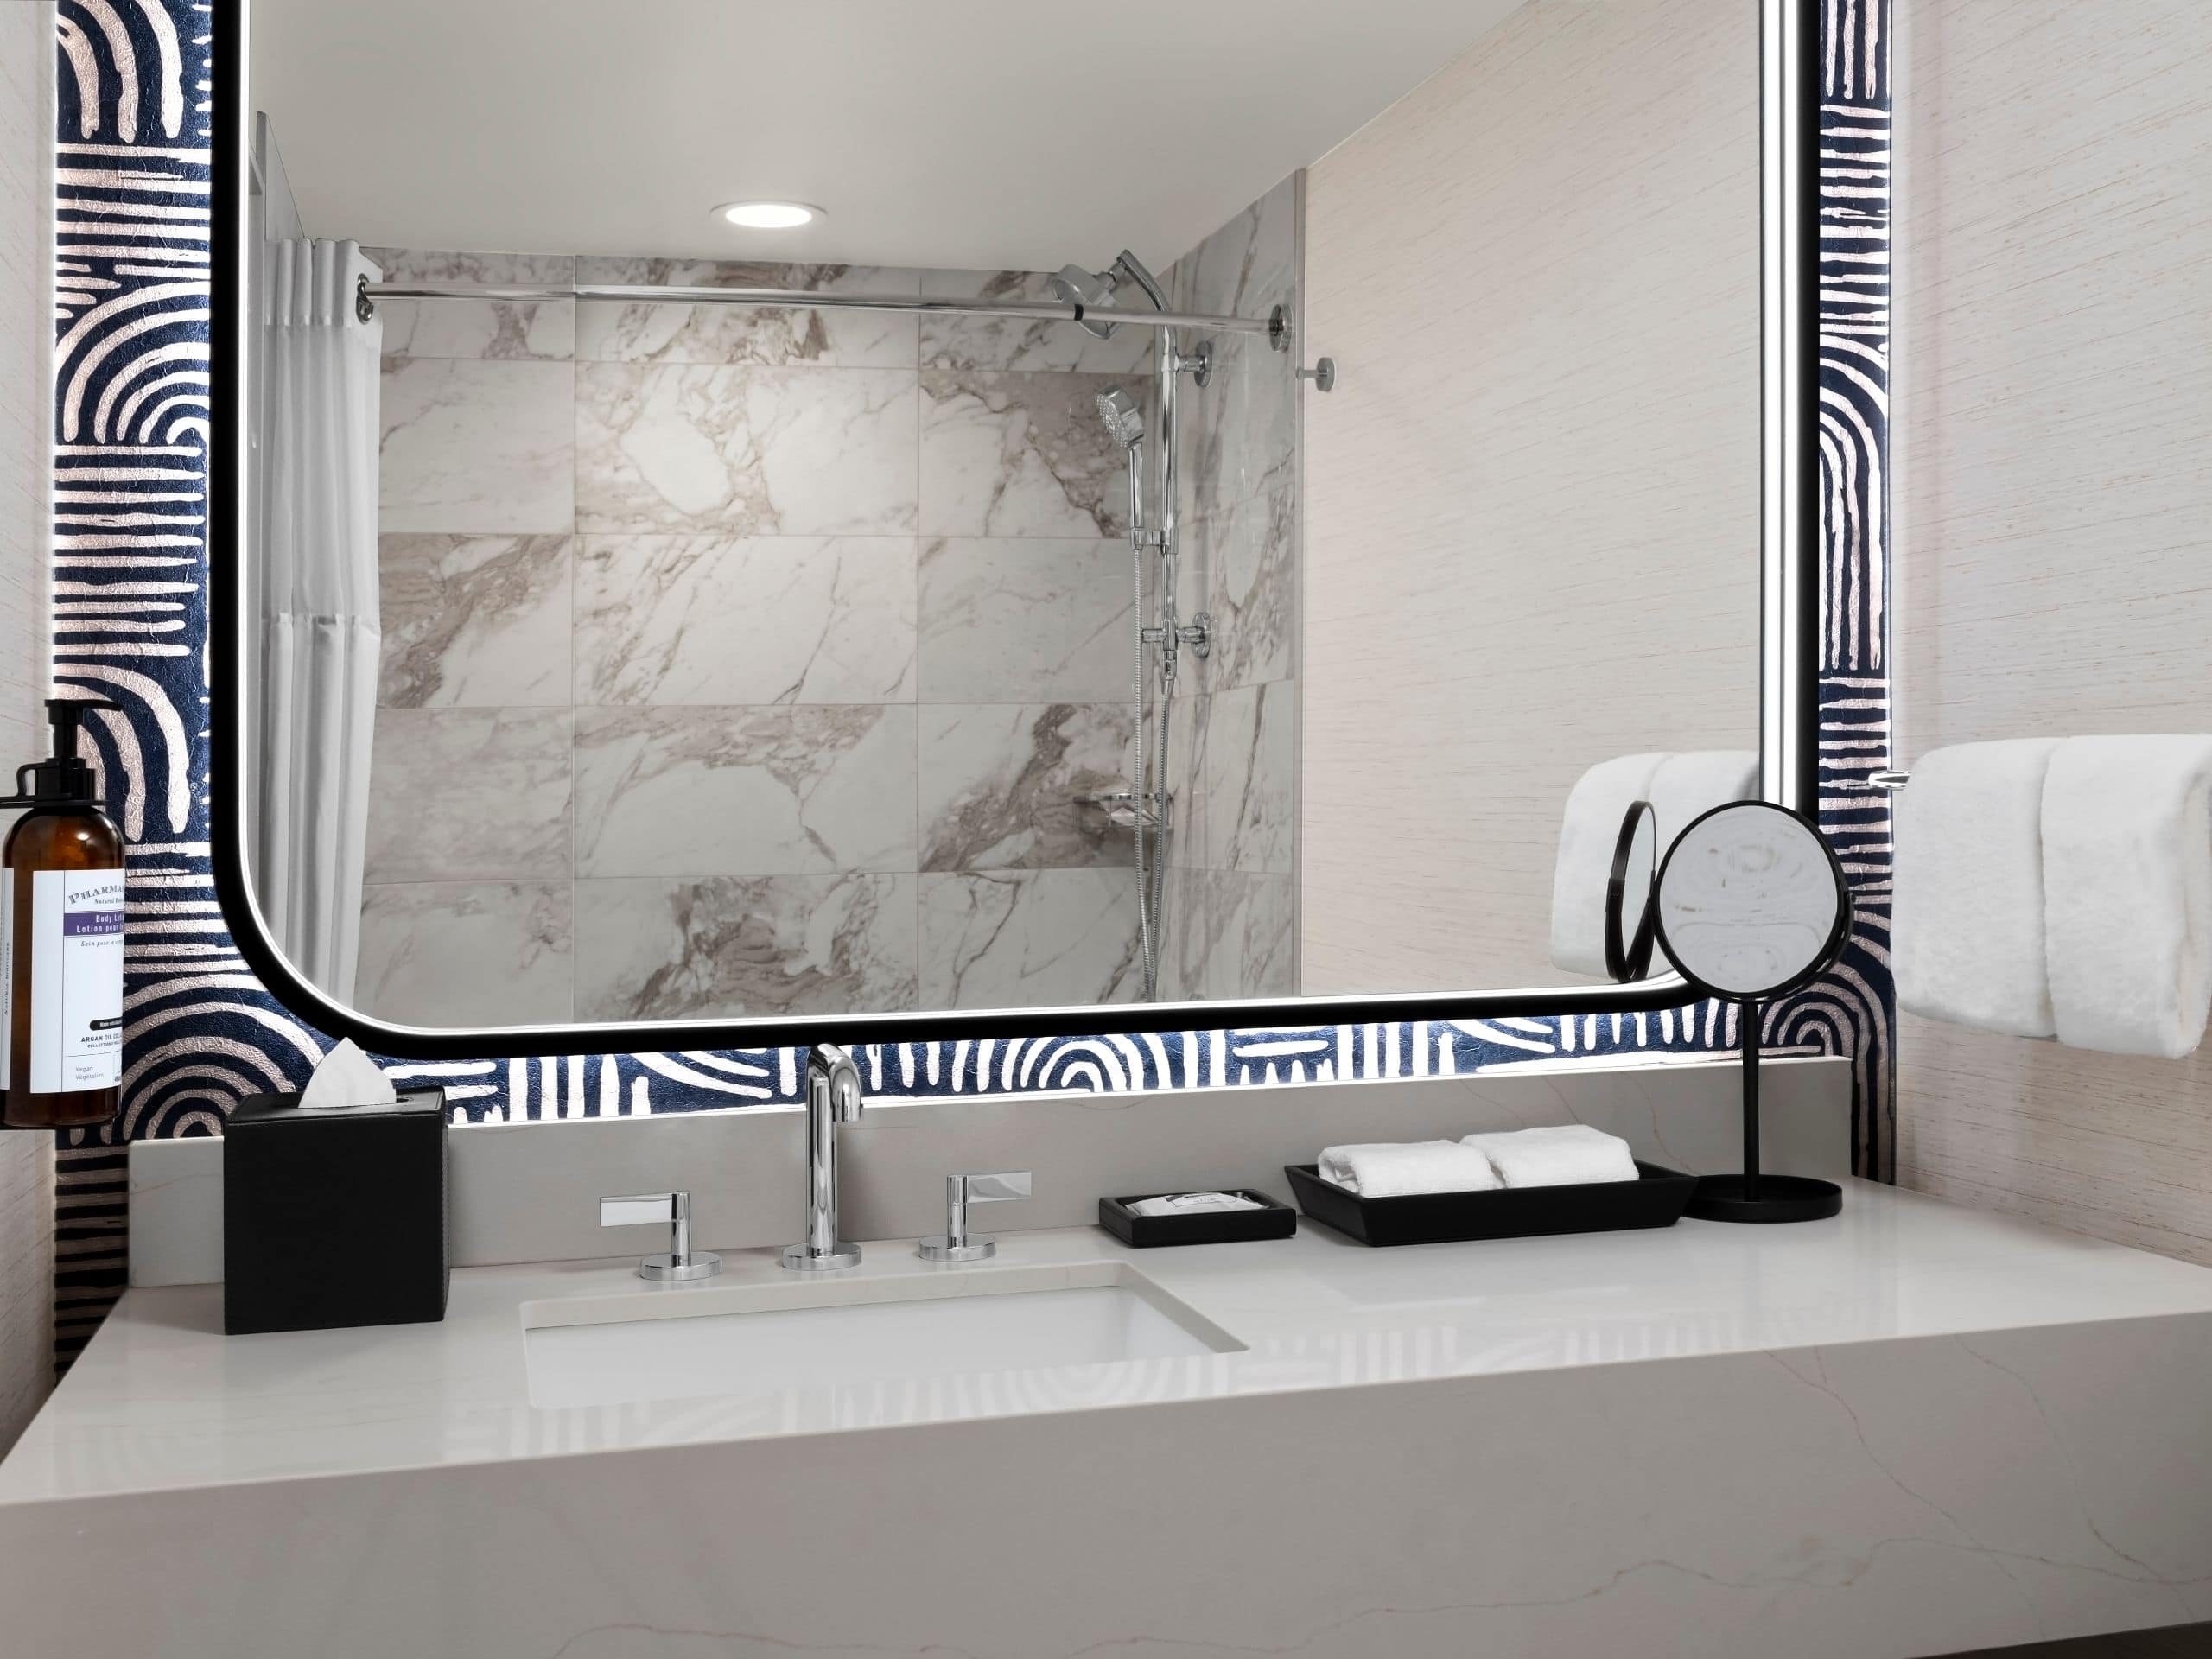 Hyatt Regency Irvine Bathroom Vanity